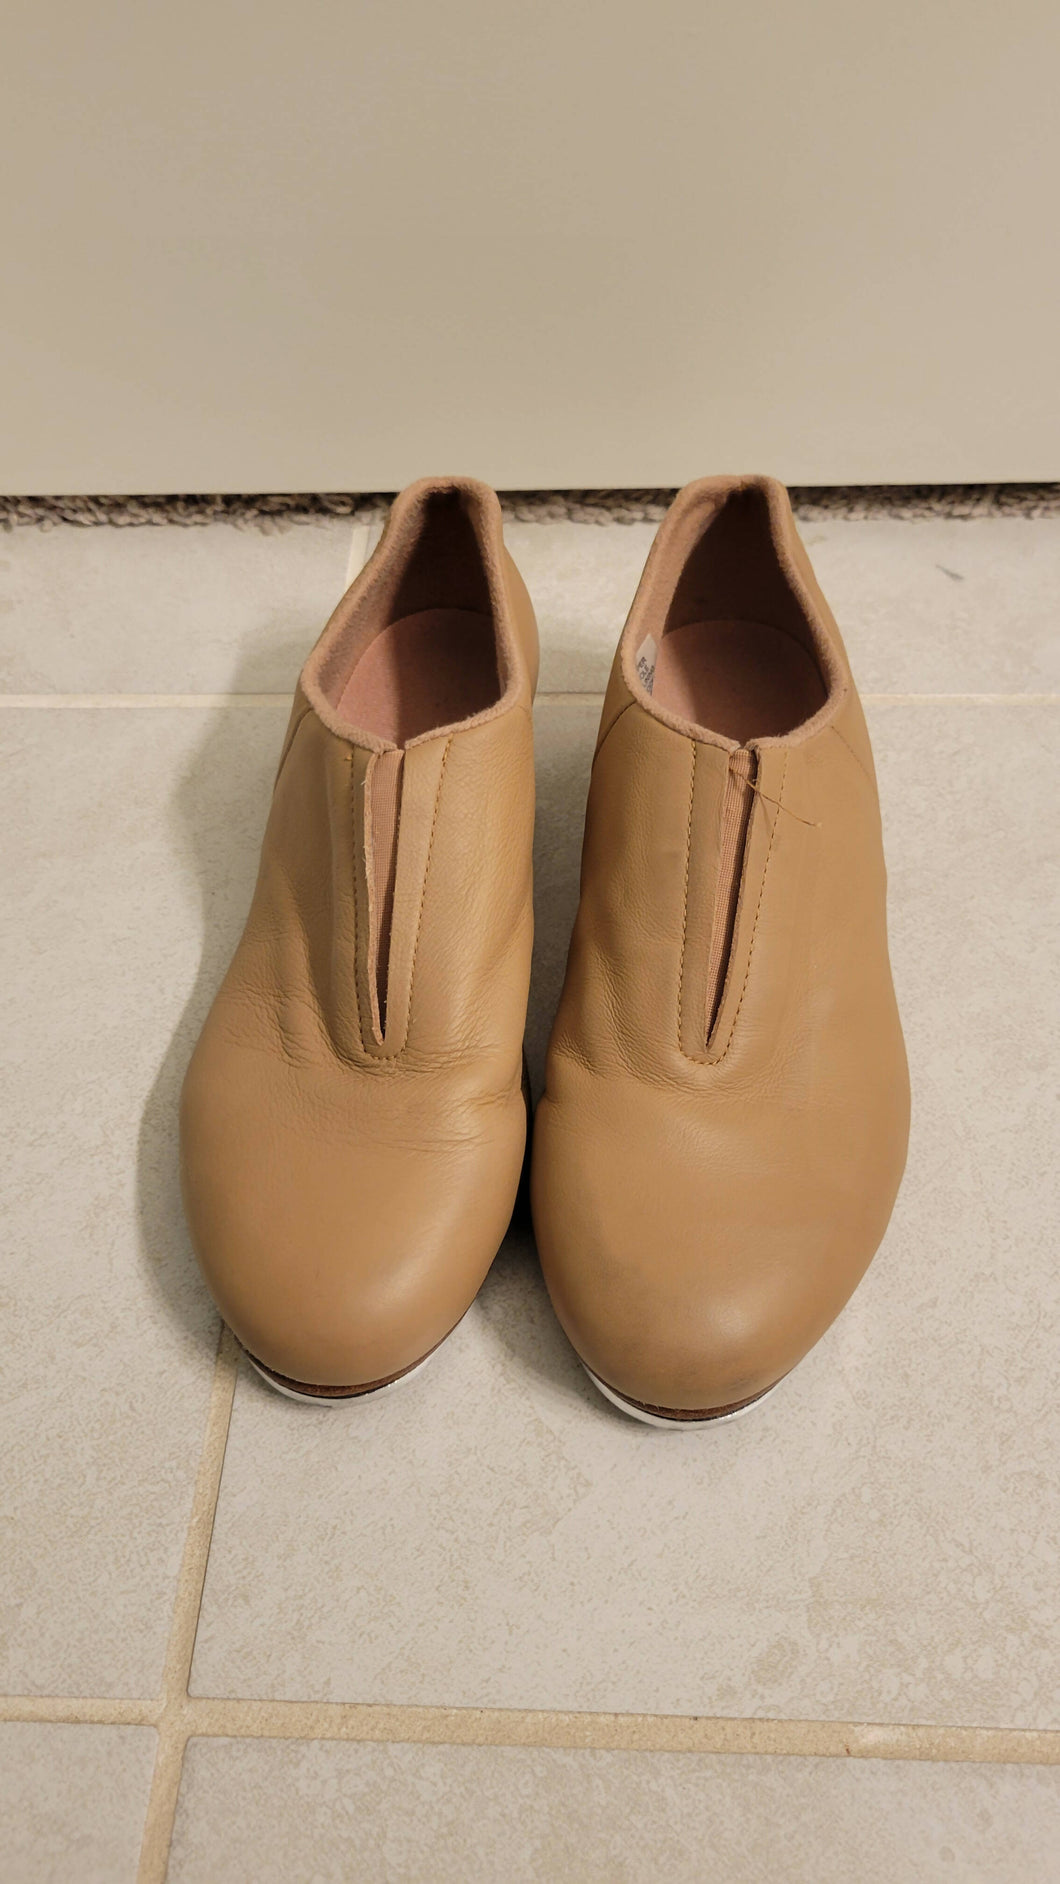 Bloch women's size 7 tap shoes